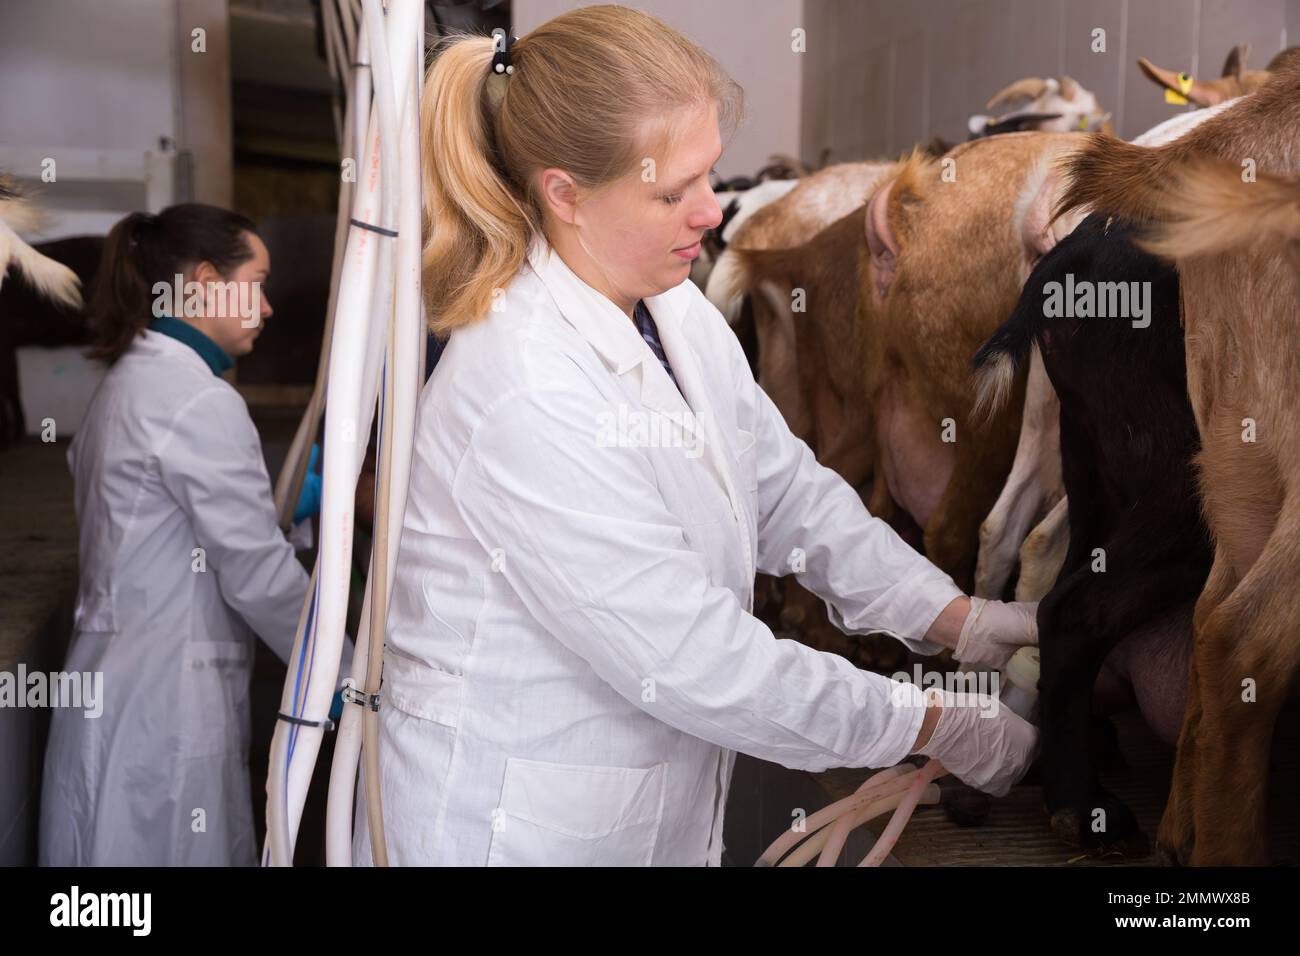 Two women milking goats Stock Photo